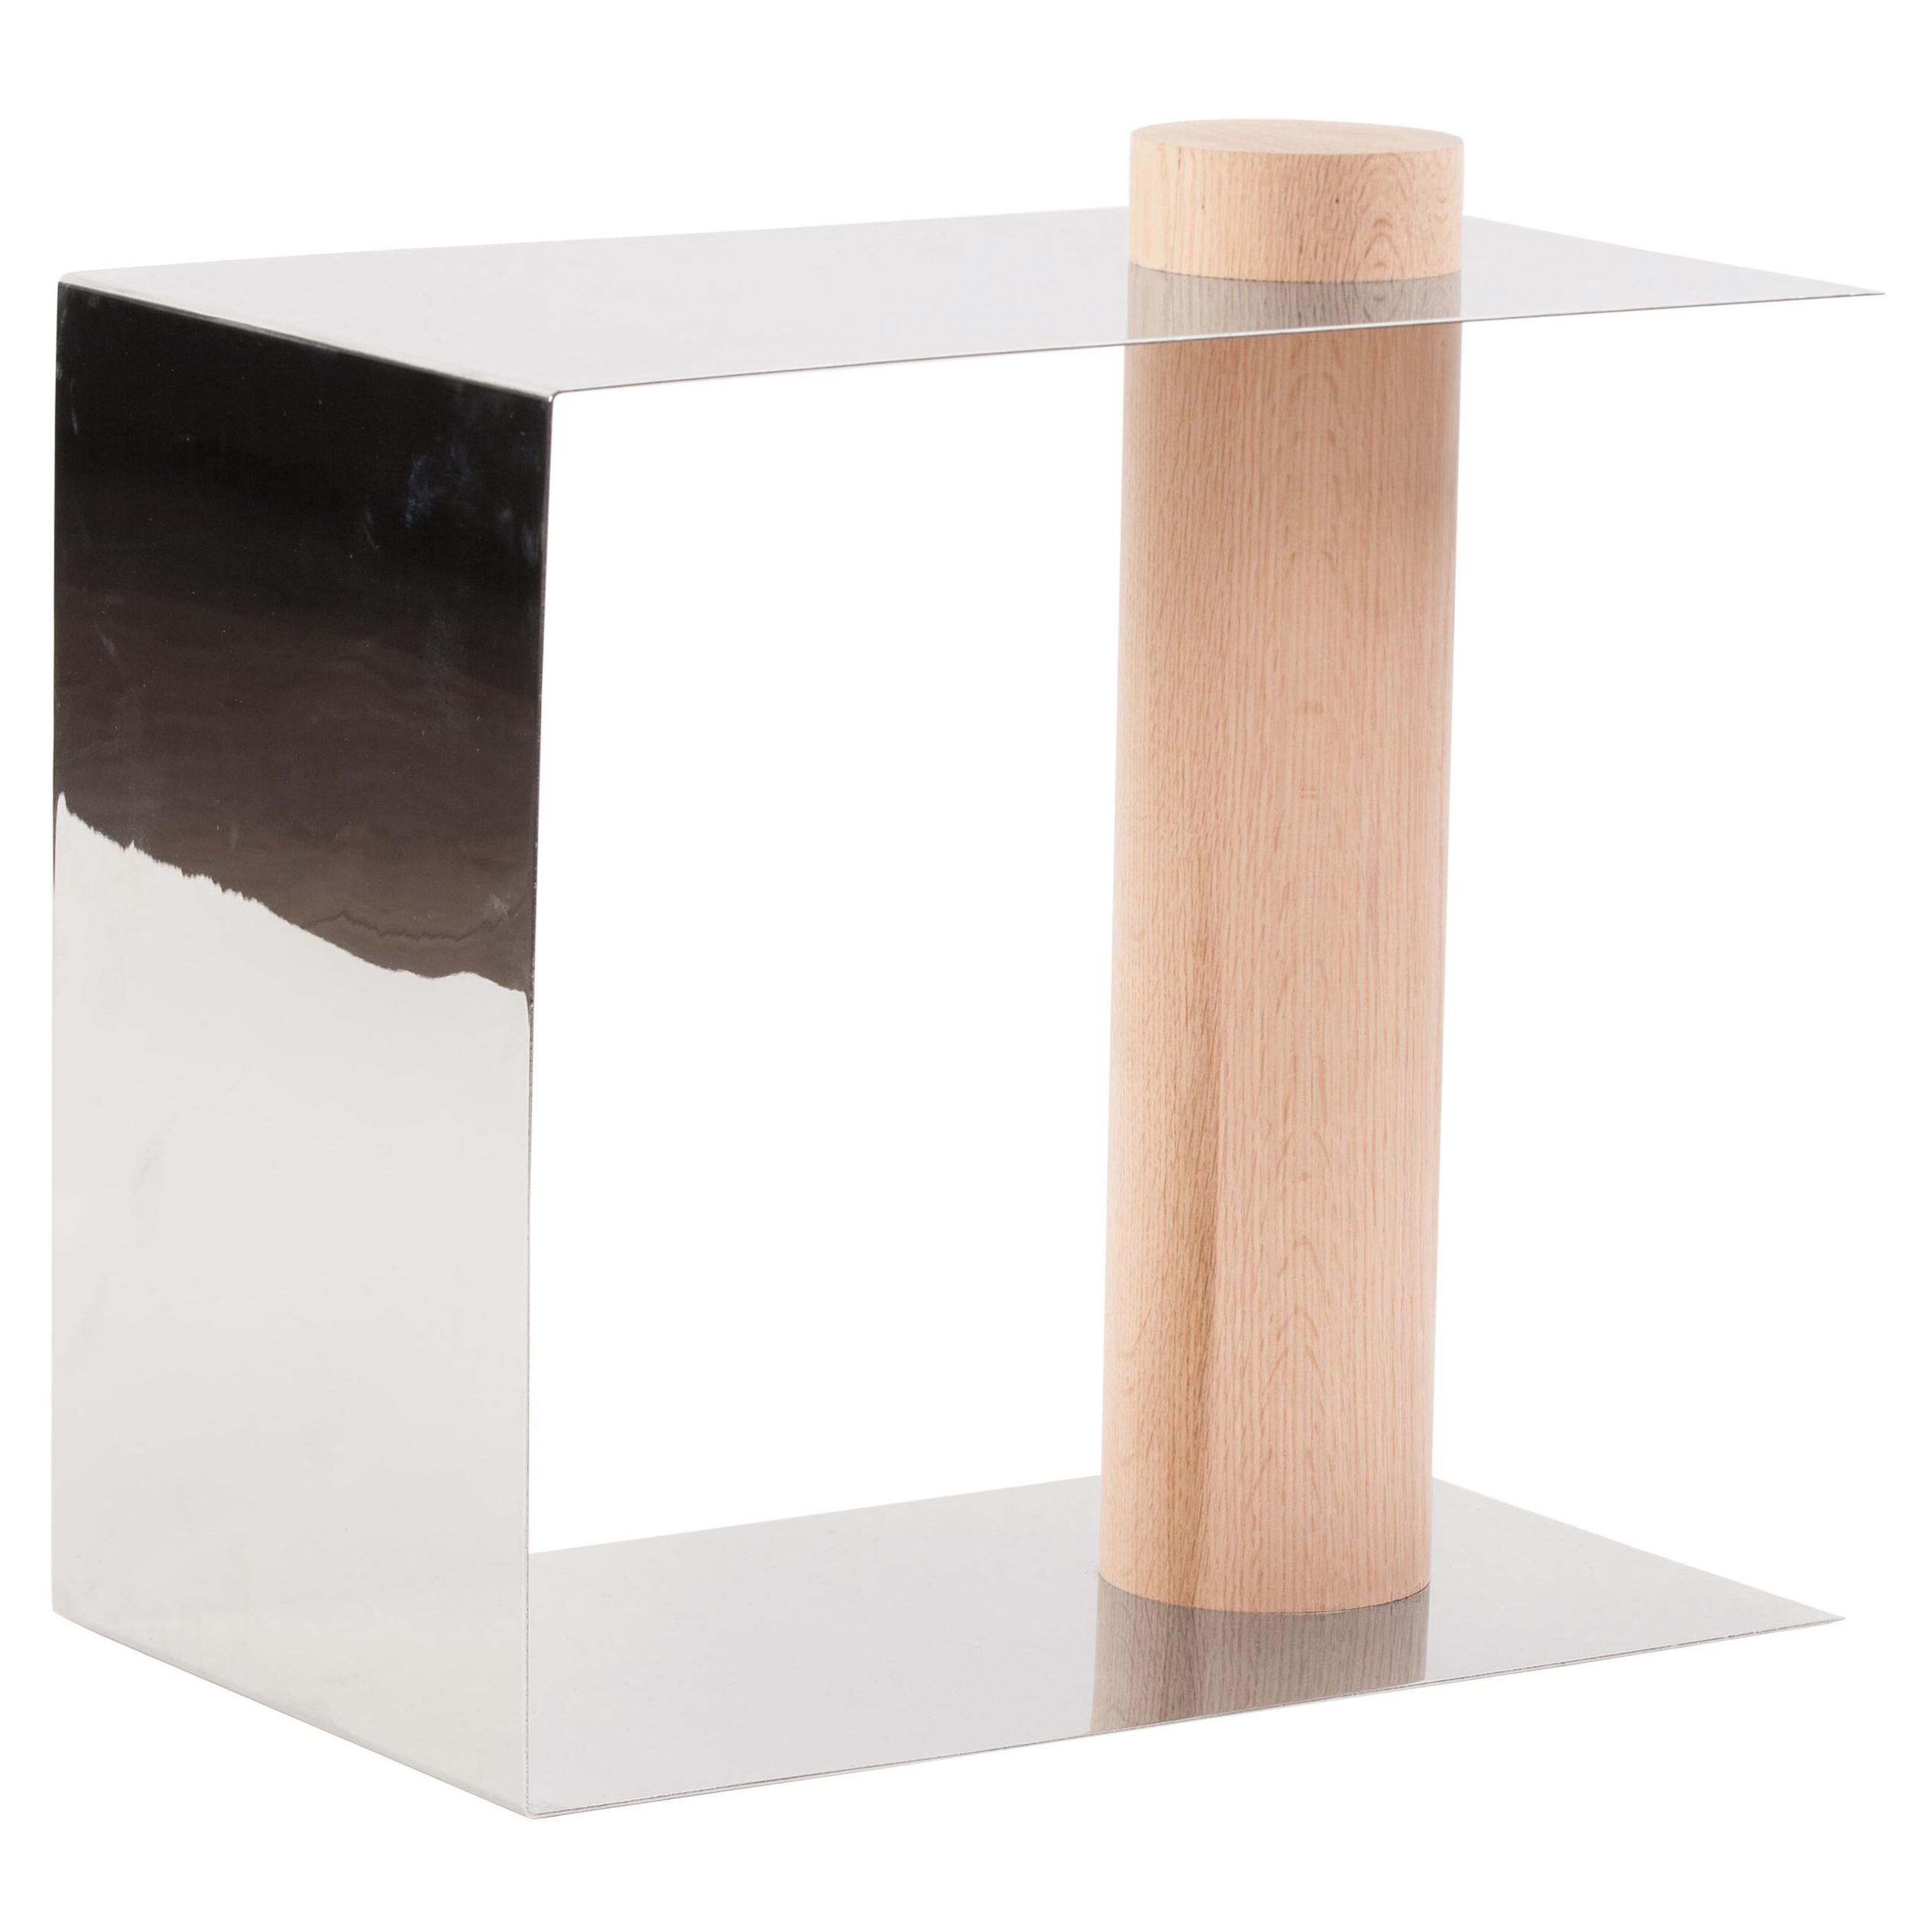 In Stock, Puru Side Table in Stainless Steel & White Oak by Estudio Persona